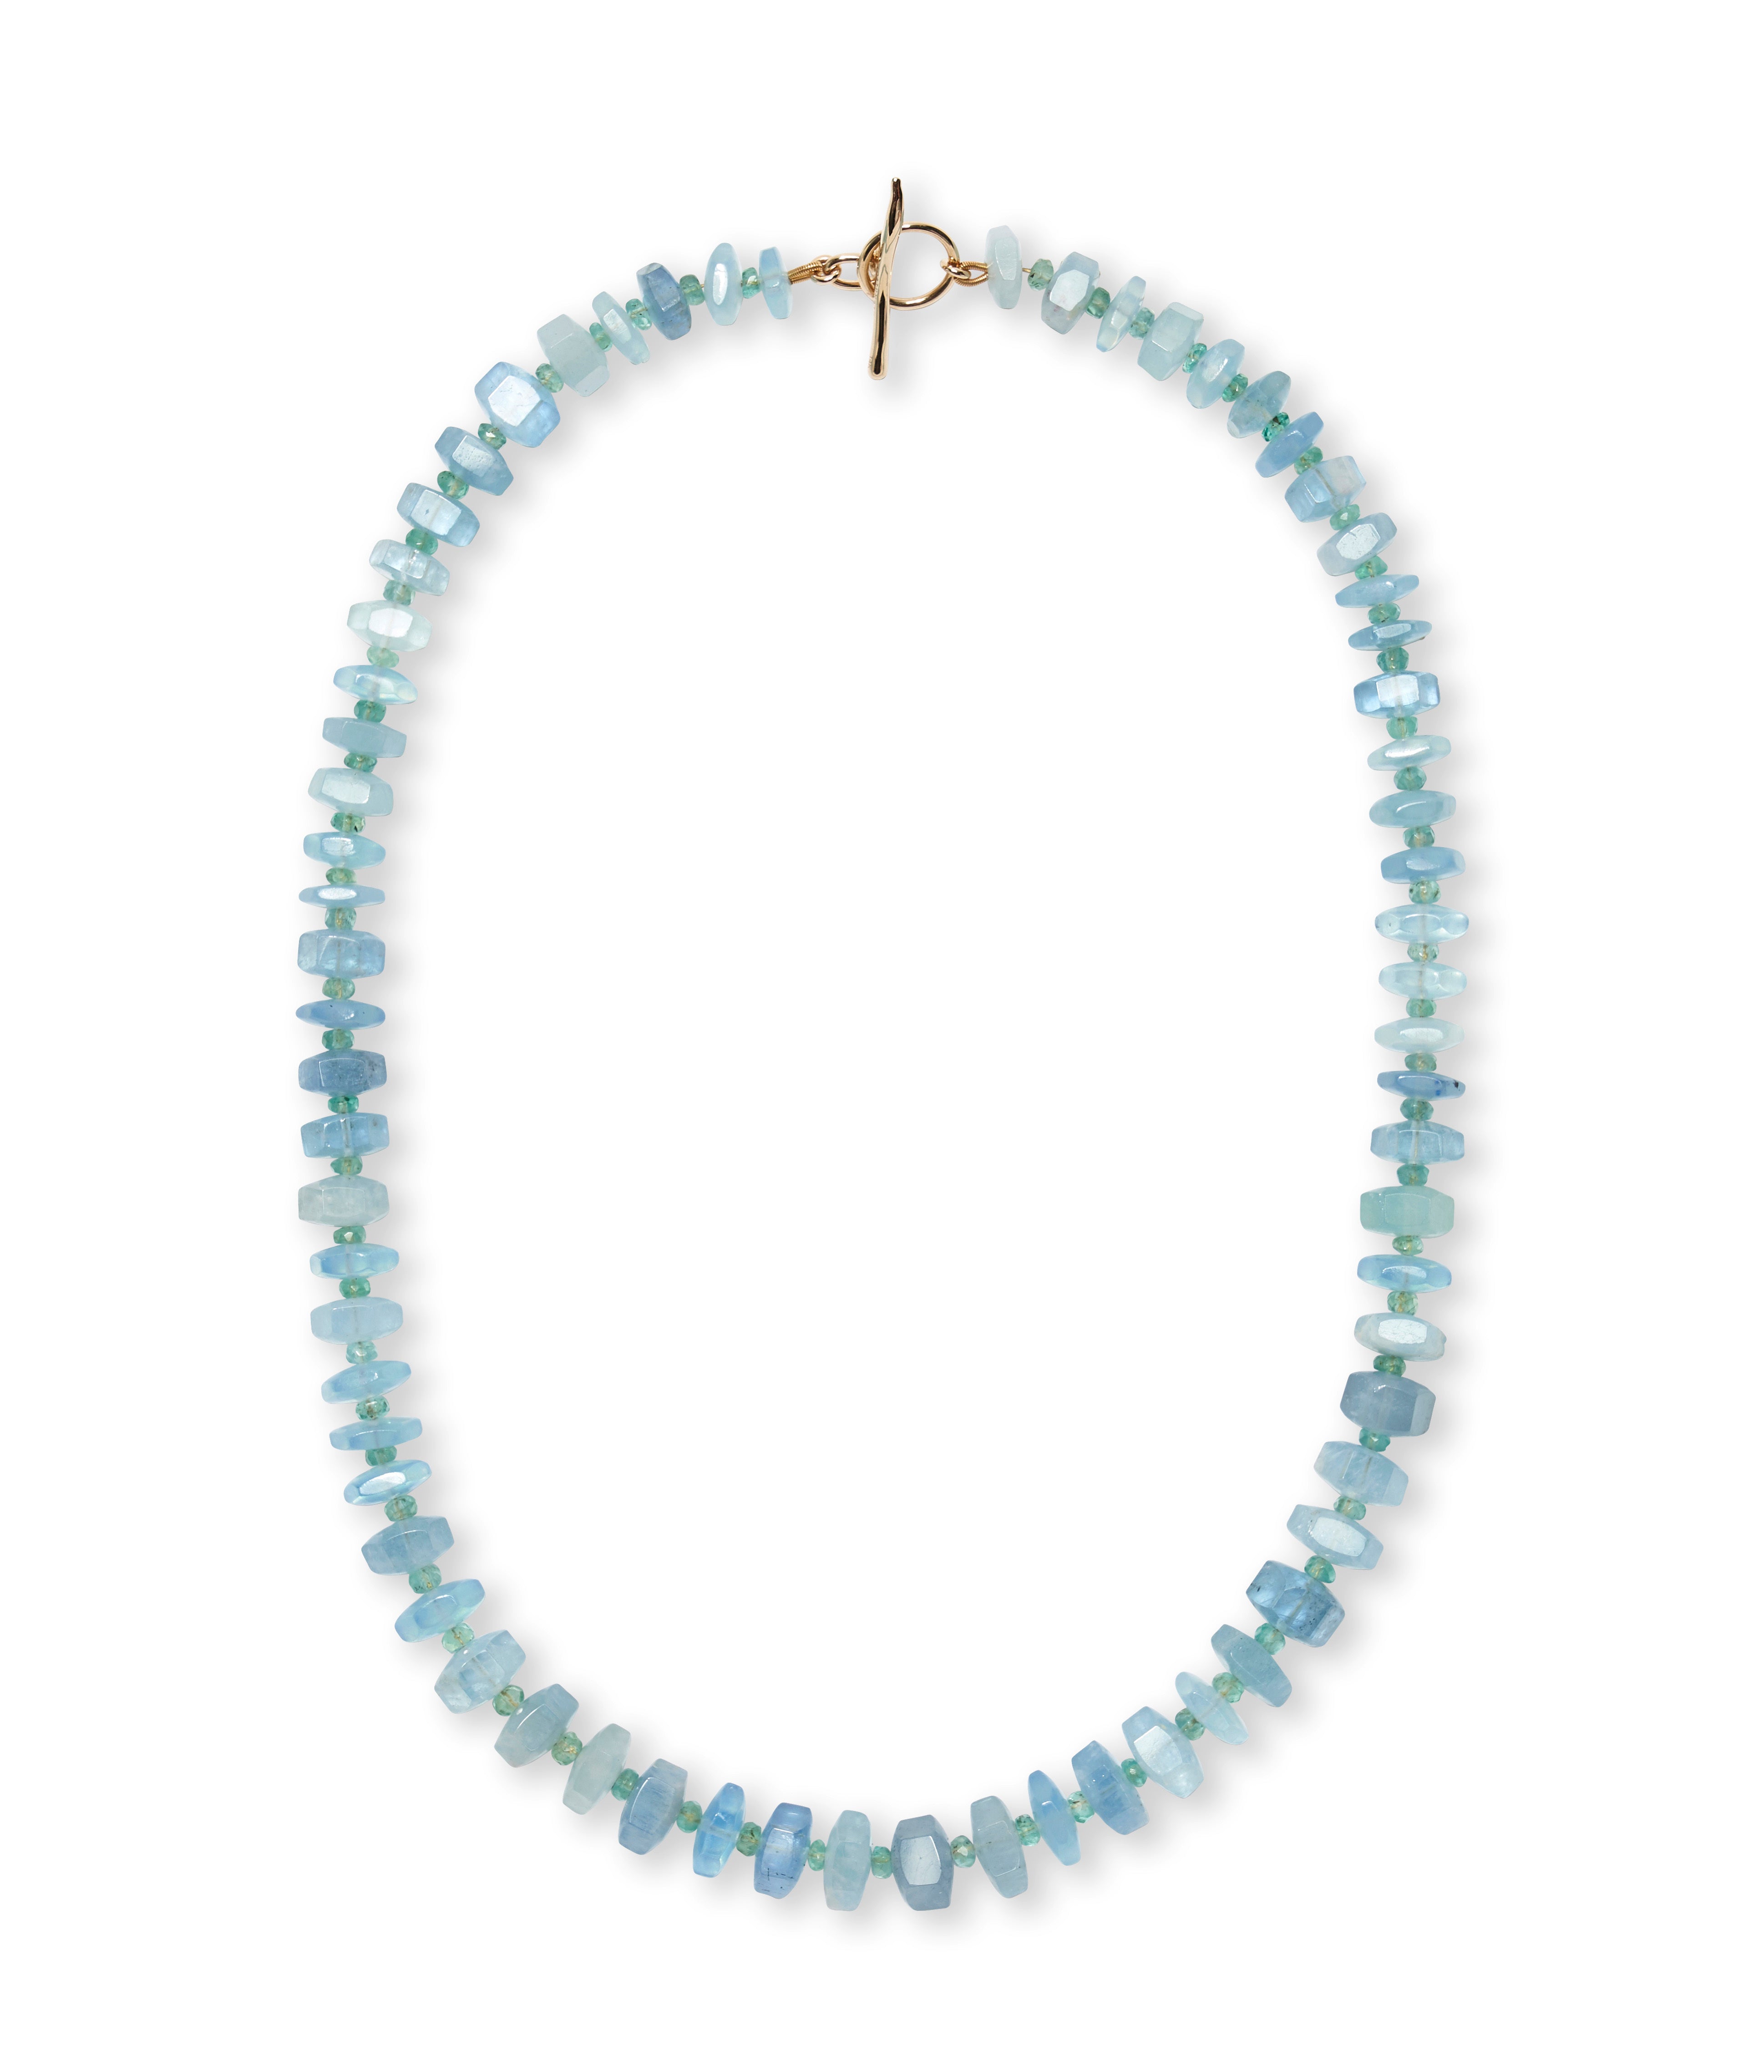 Aquamarine, Emerald & 14k Gold Necklace. Aquamarine and emerald beaded collar necklace with 14k gold toggle & closure.